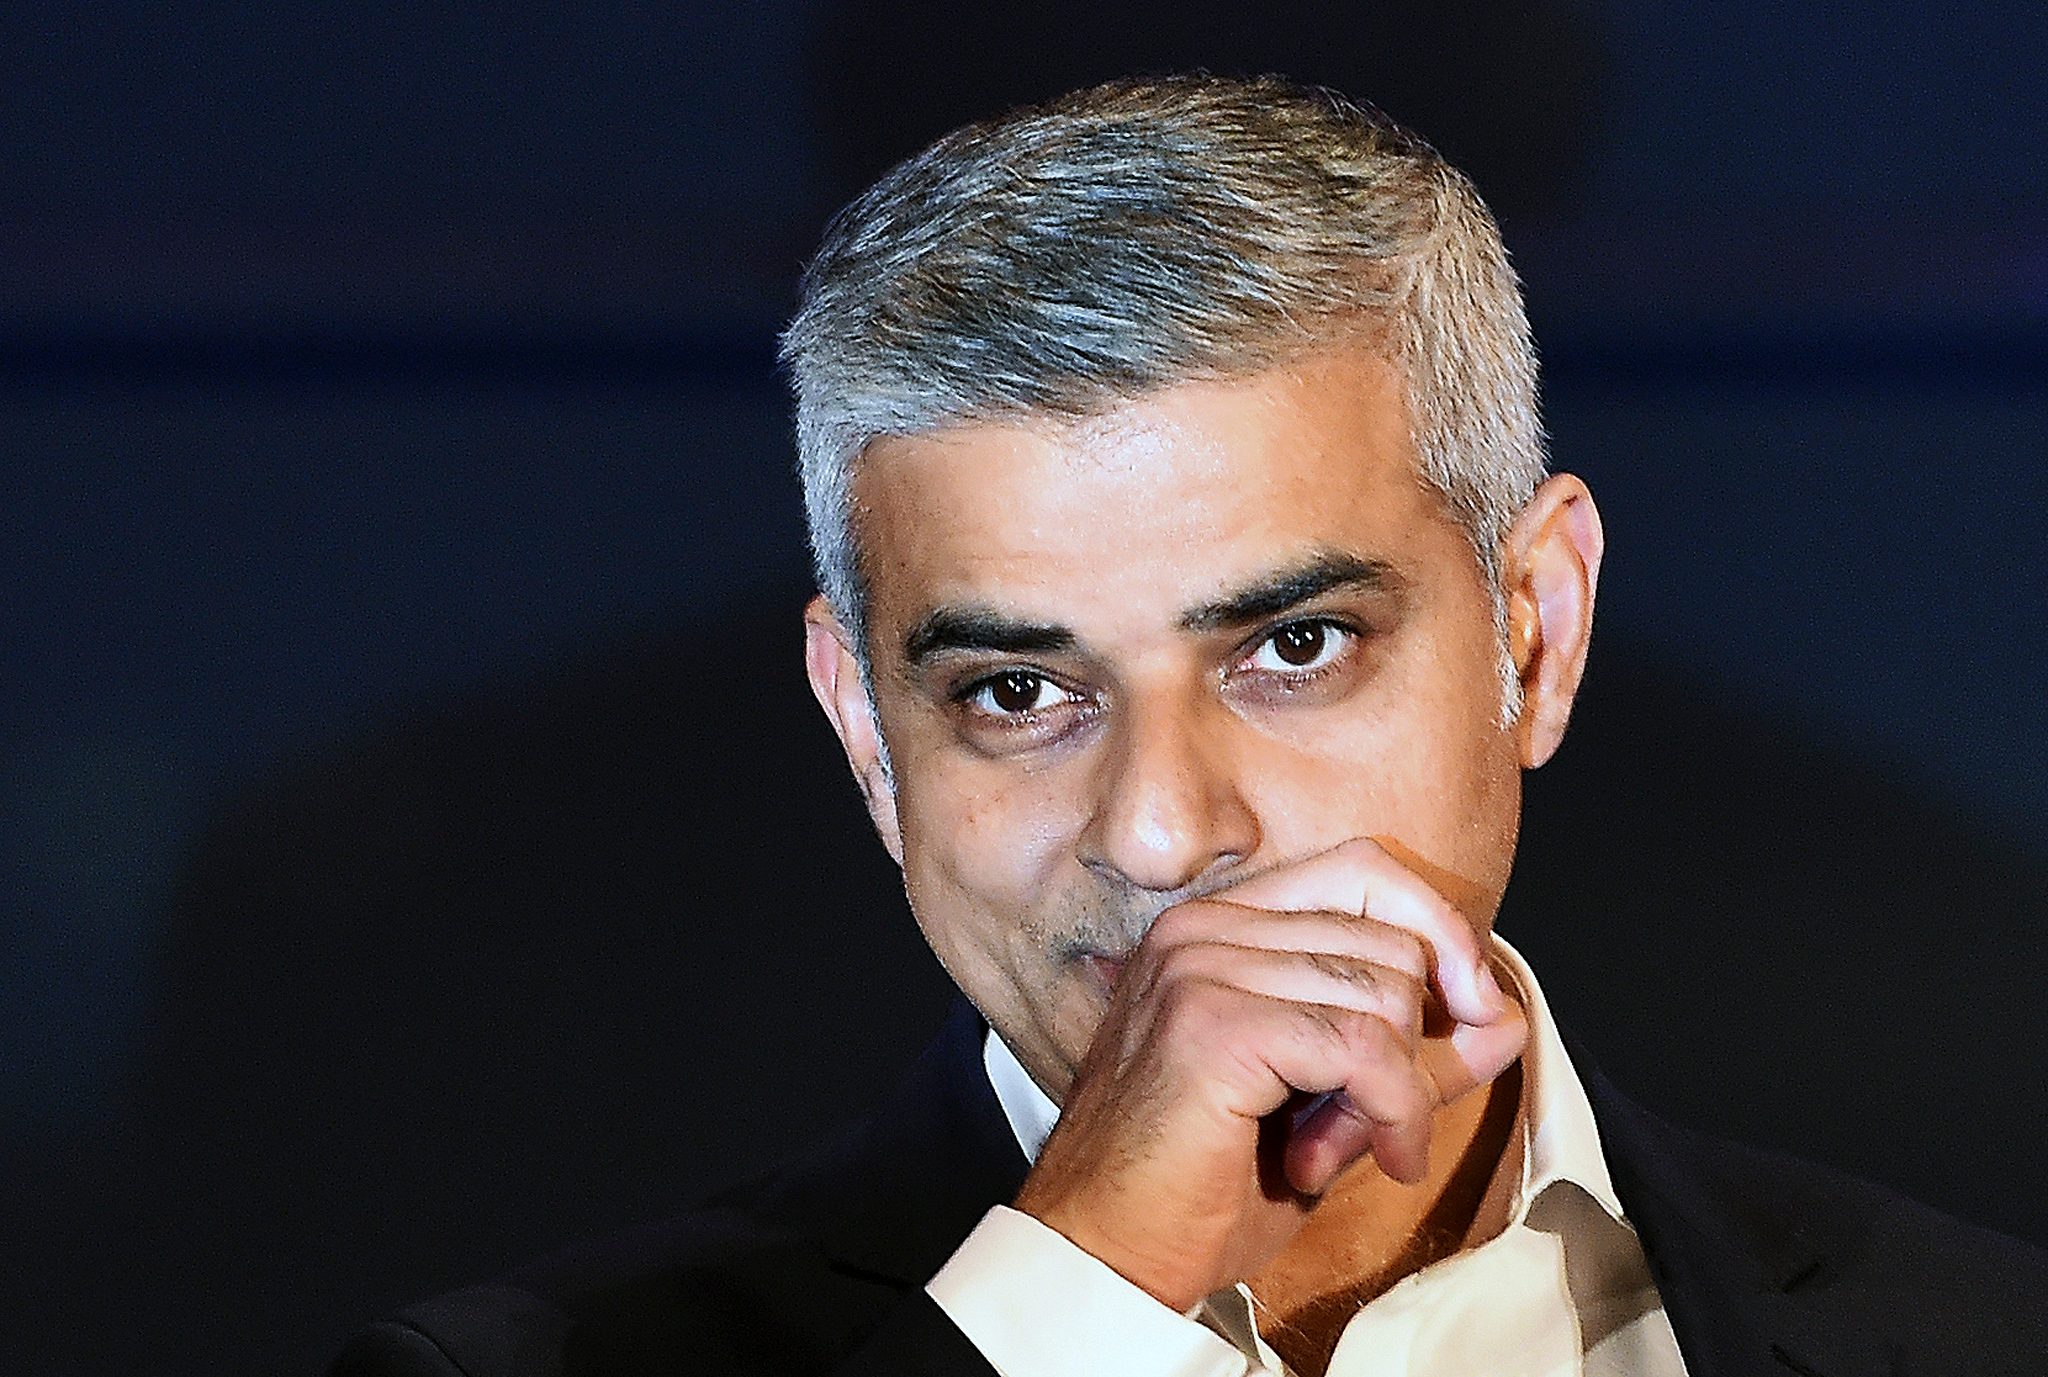 Khan triumphs as London’s first Muslim mayor